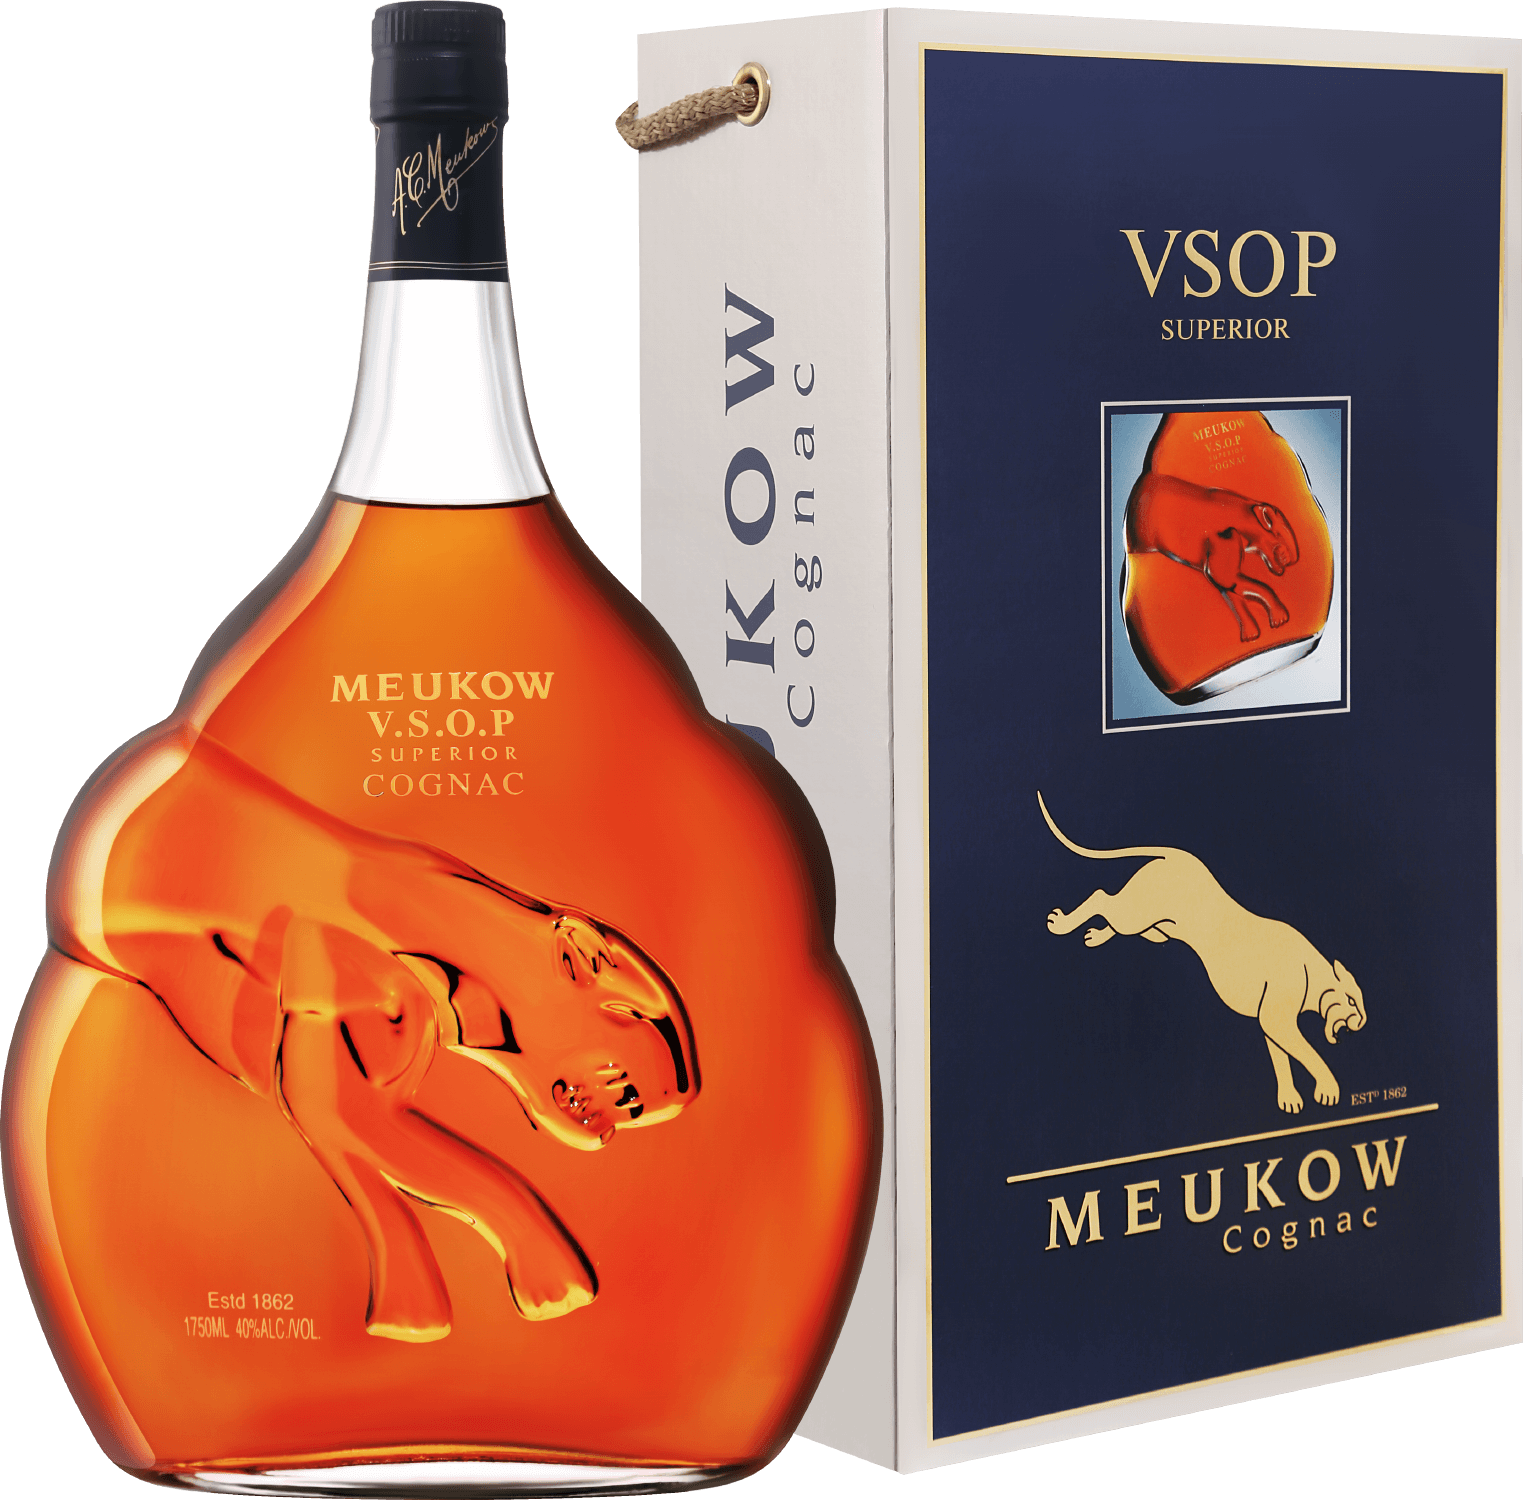 meukow cognac vs gift box Meukow Cognac VSOP Superior (gift box)